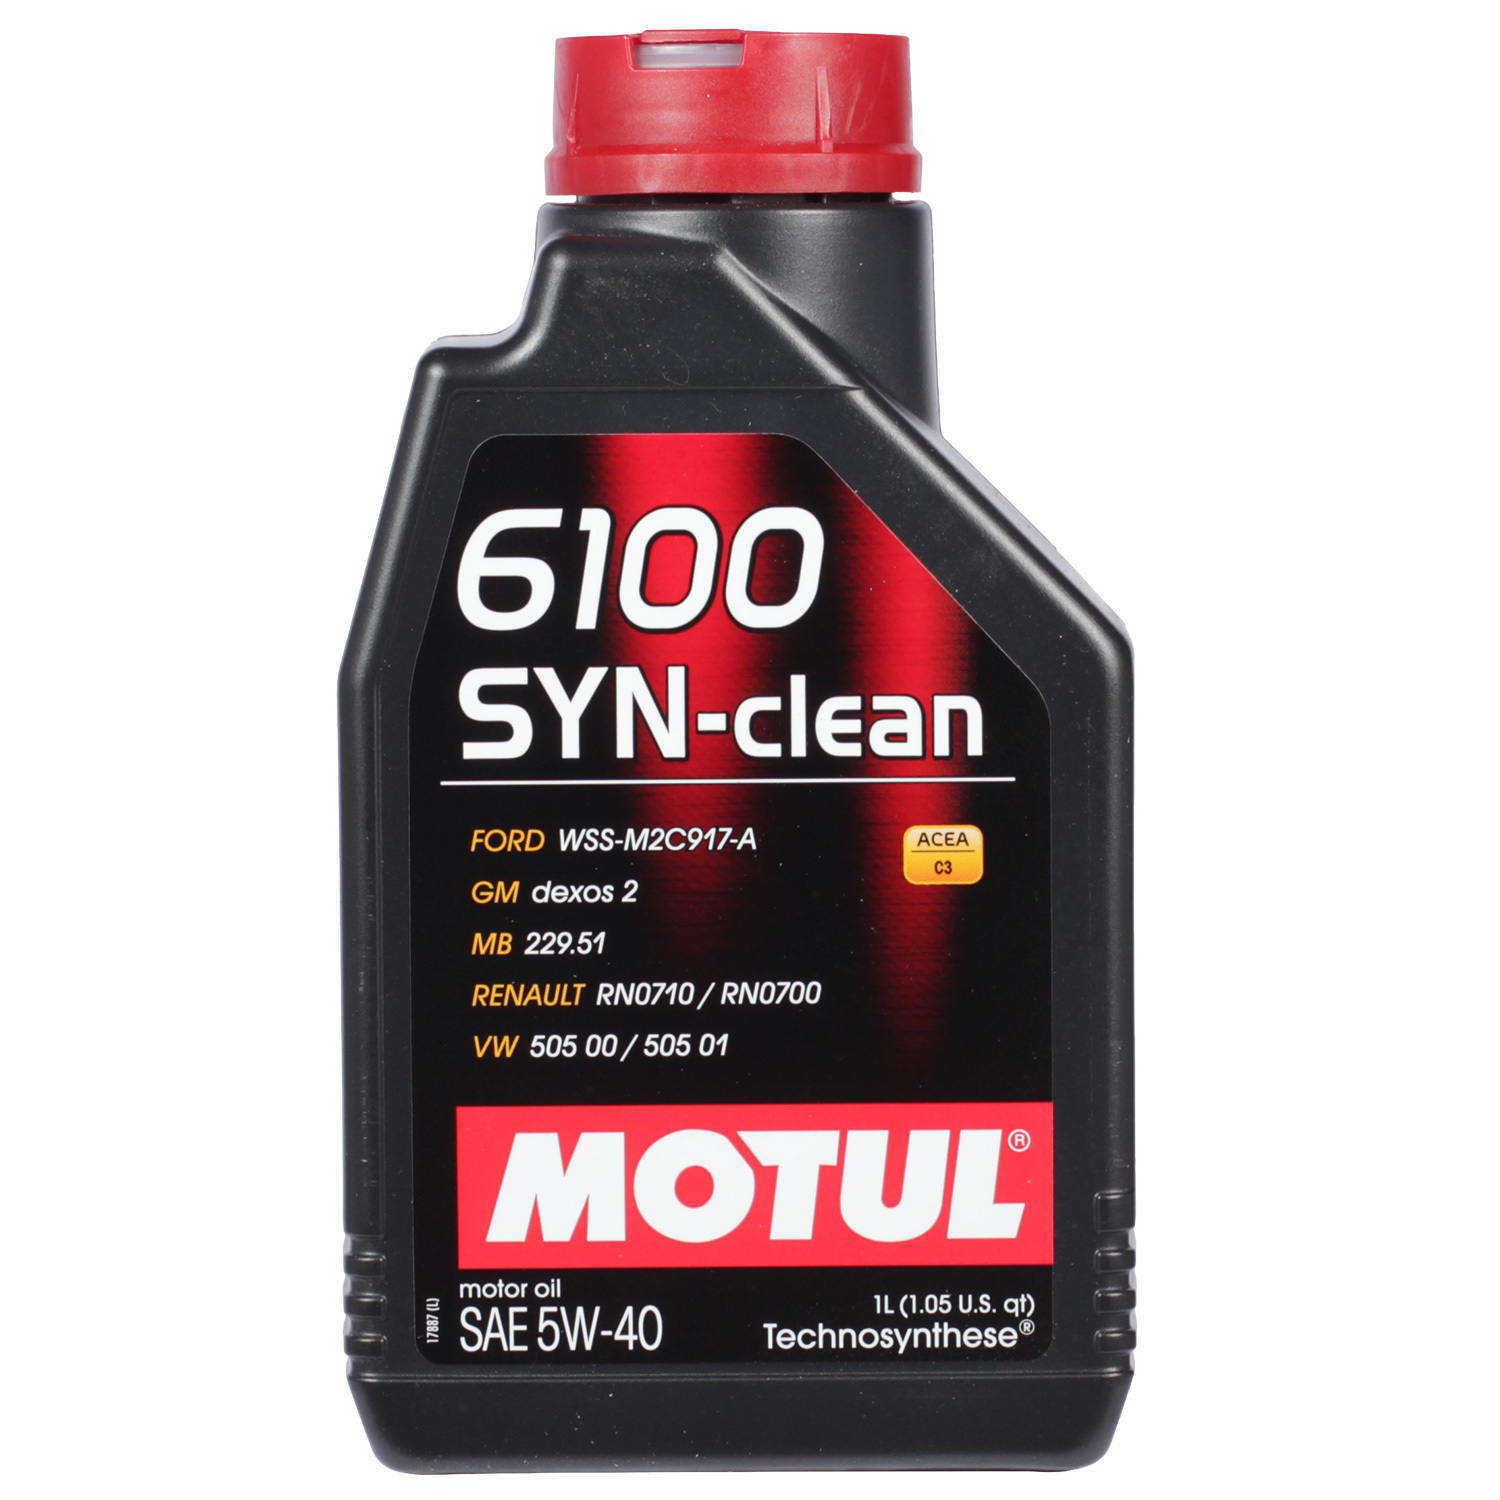 Motul Моторное масло Motul 6100 SYN-CLEAN 5W-40, 1 л motul моторное масло motul 6100 save lite 5w 30 4 л